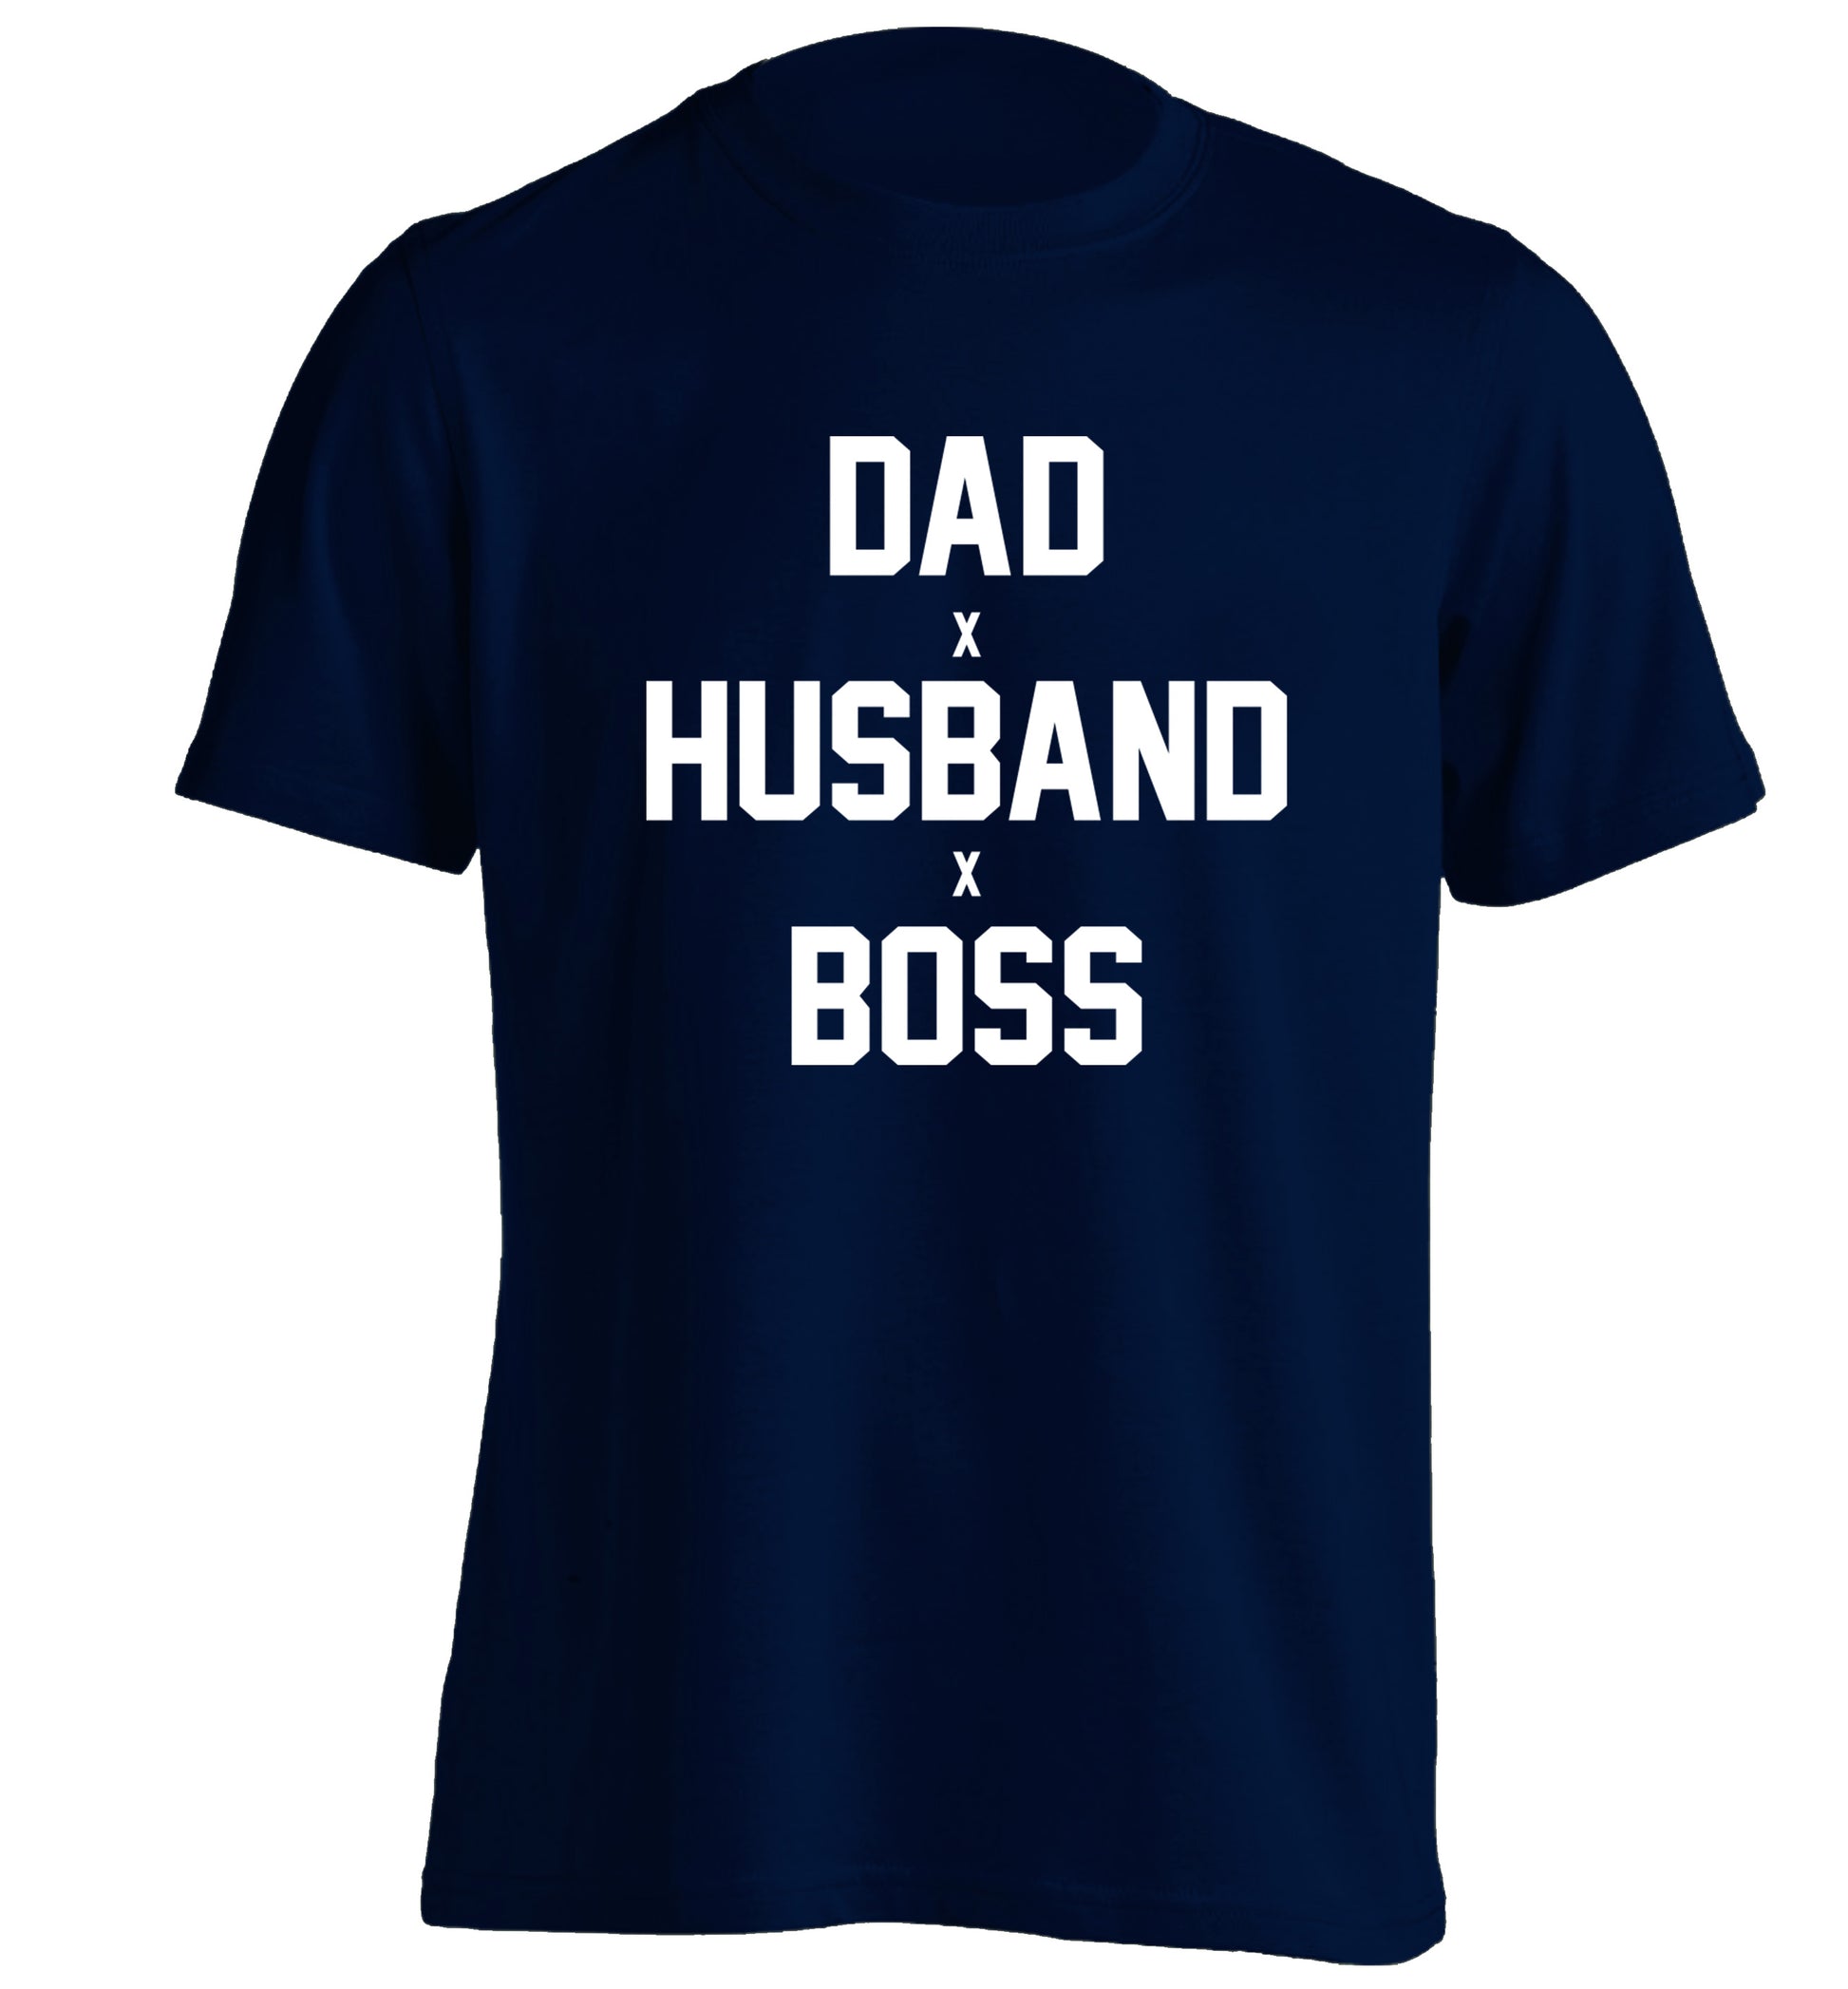 Dad husband boss adults unisex navy Tshirt 2XL